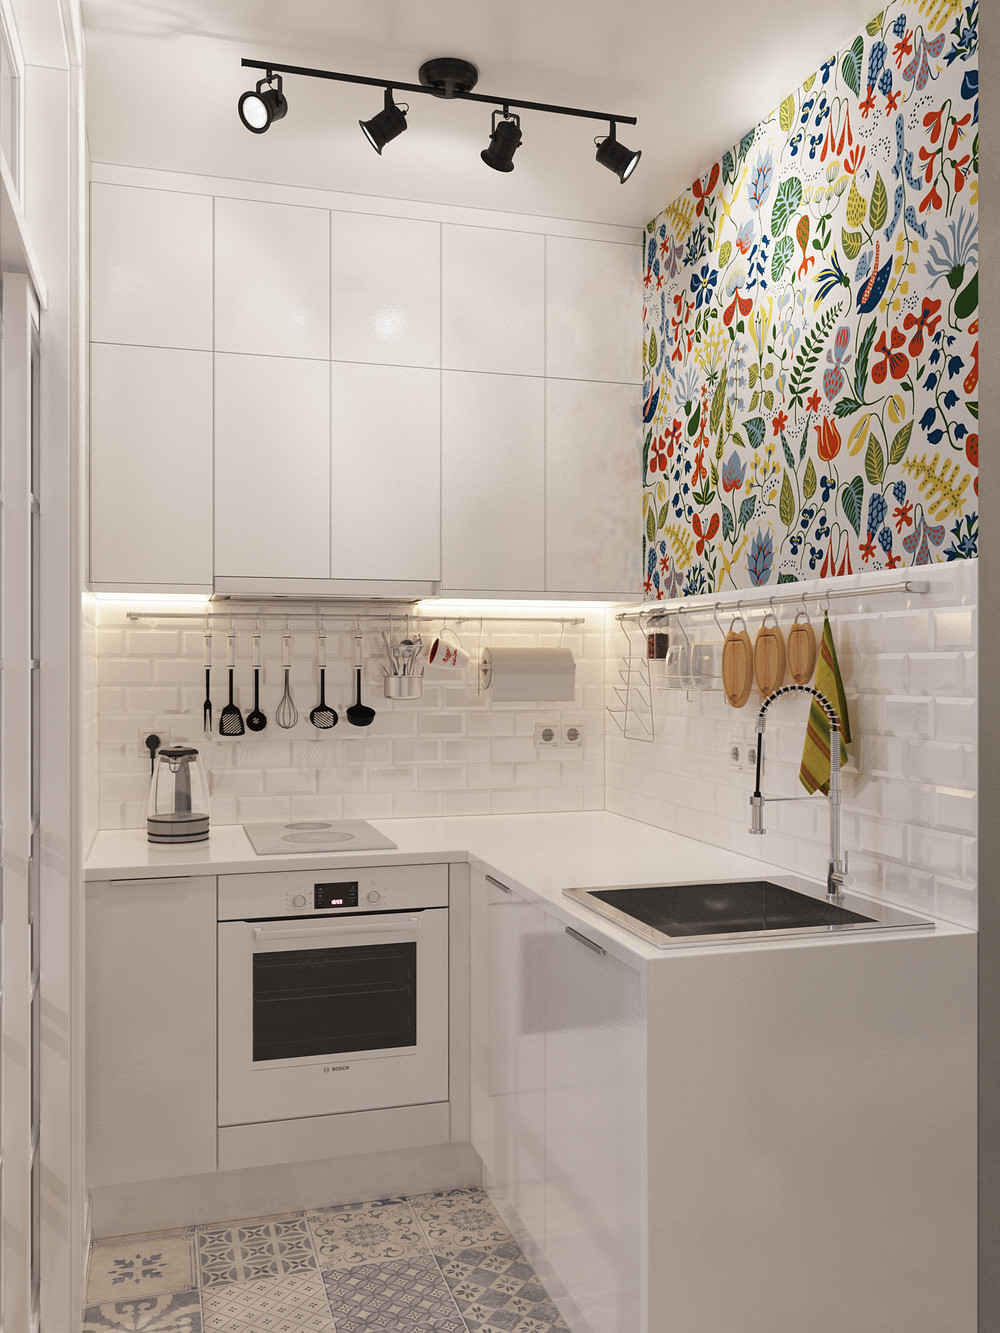 Tiny Kitchen Design Wall Art Interior Design Ideas